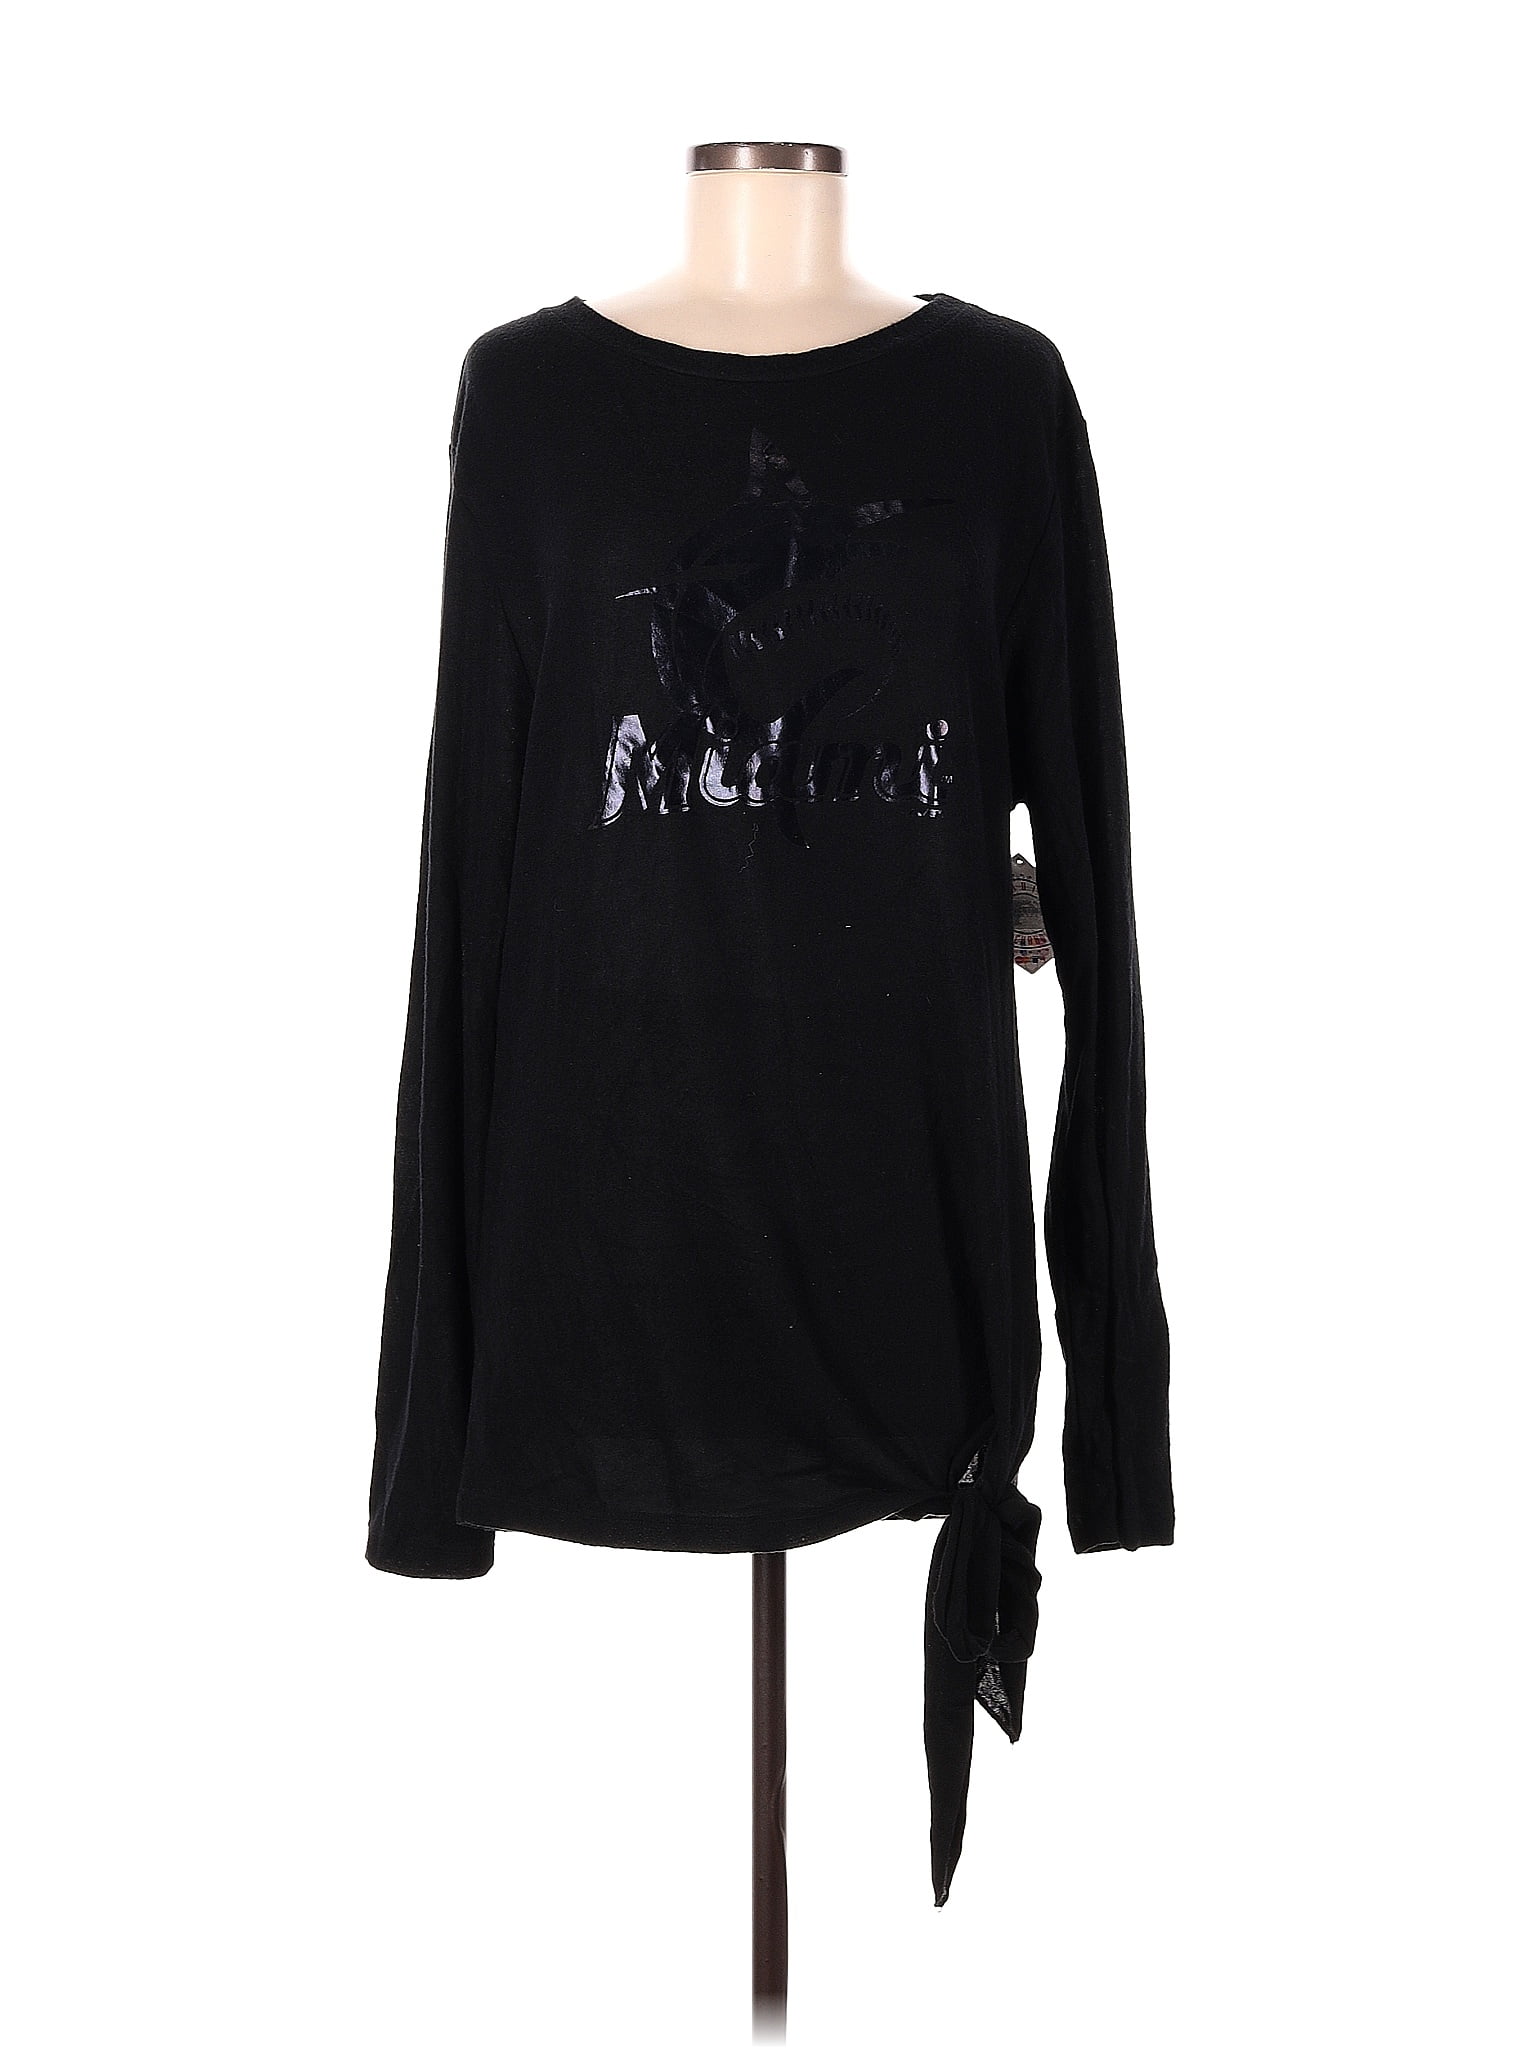 Majestic Black Long Sleeve T-Shirt Size L - 56% off | ThredUp